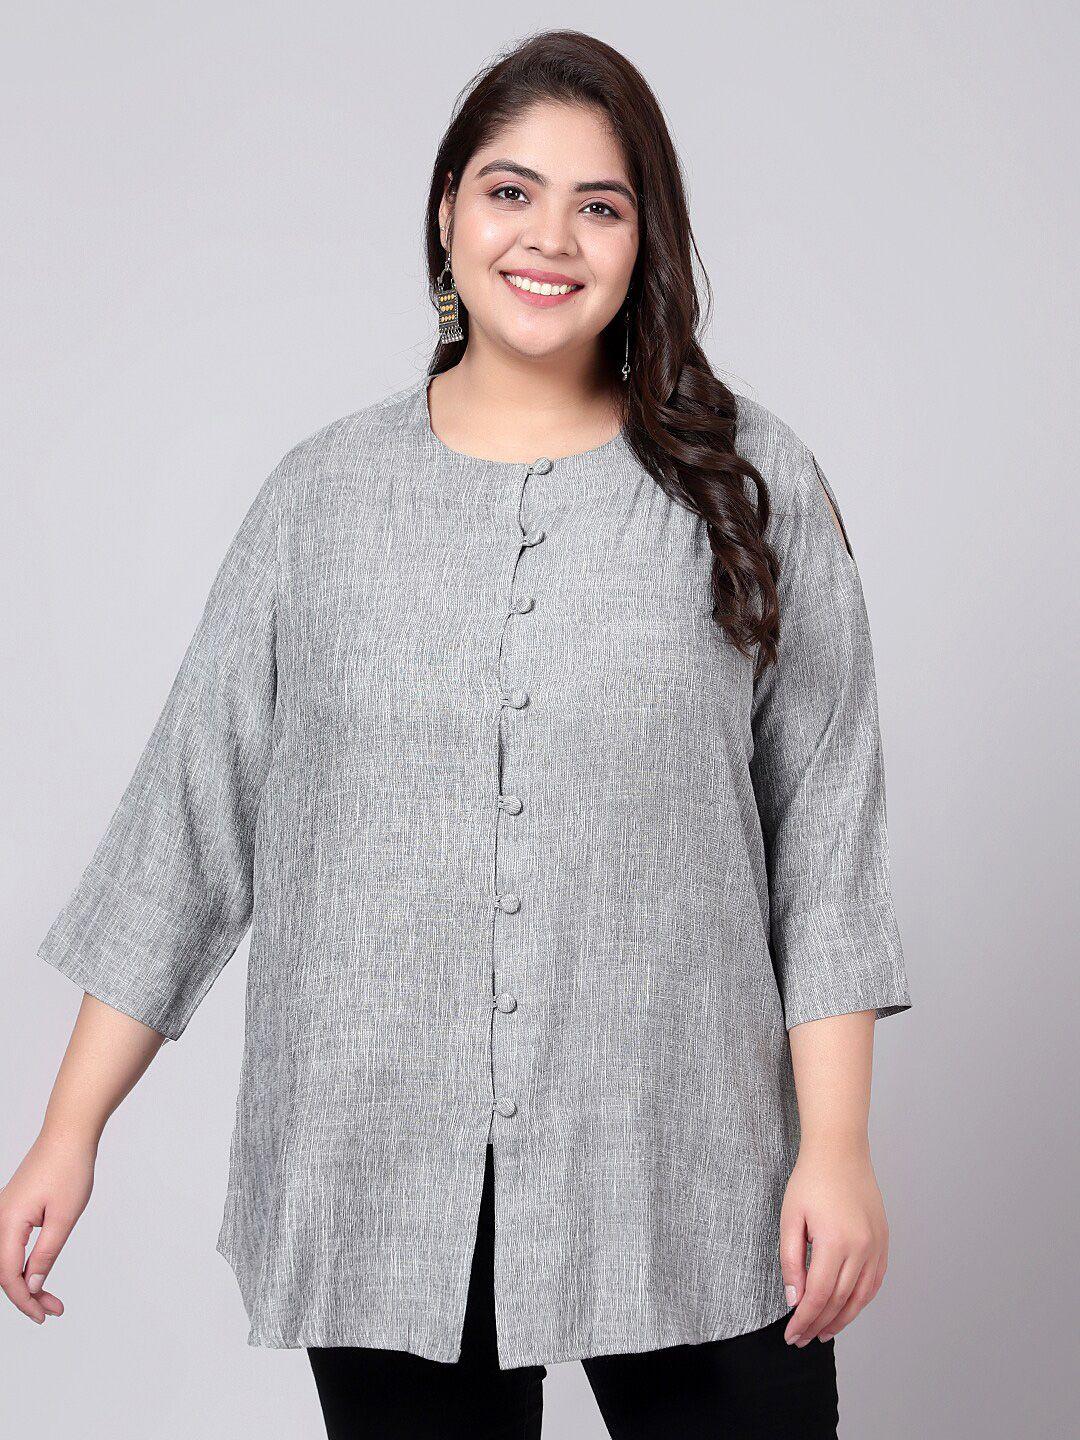 indietoga-grey-plus-size-tunic-cotton-top